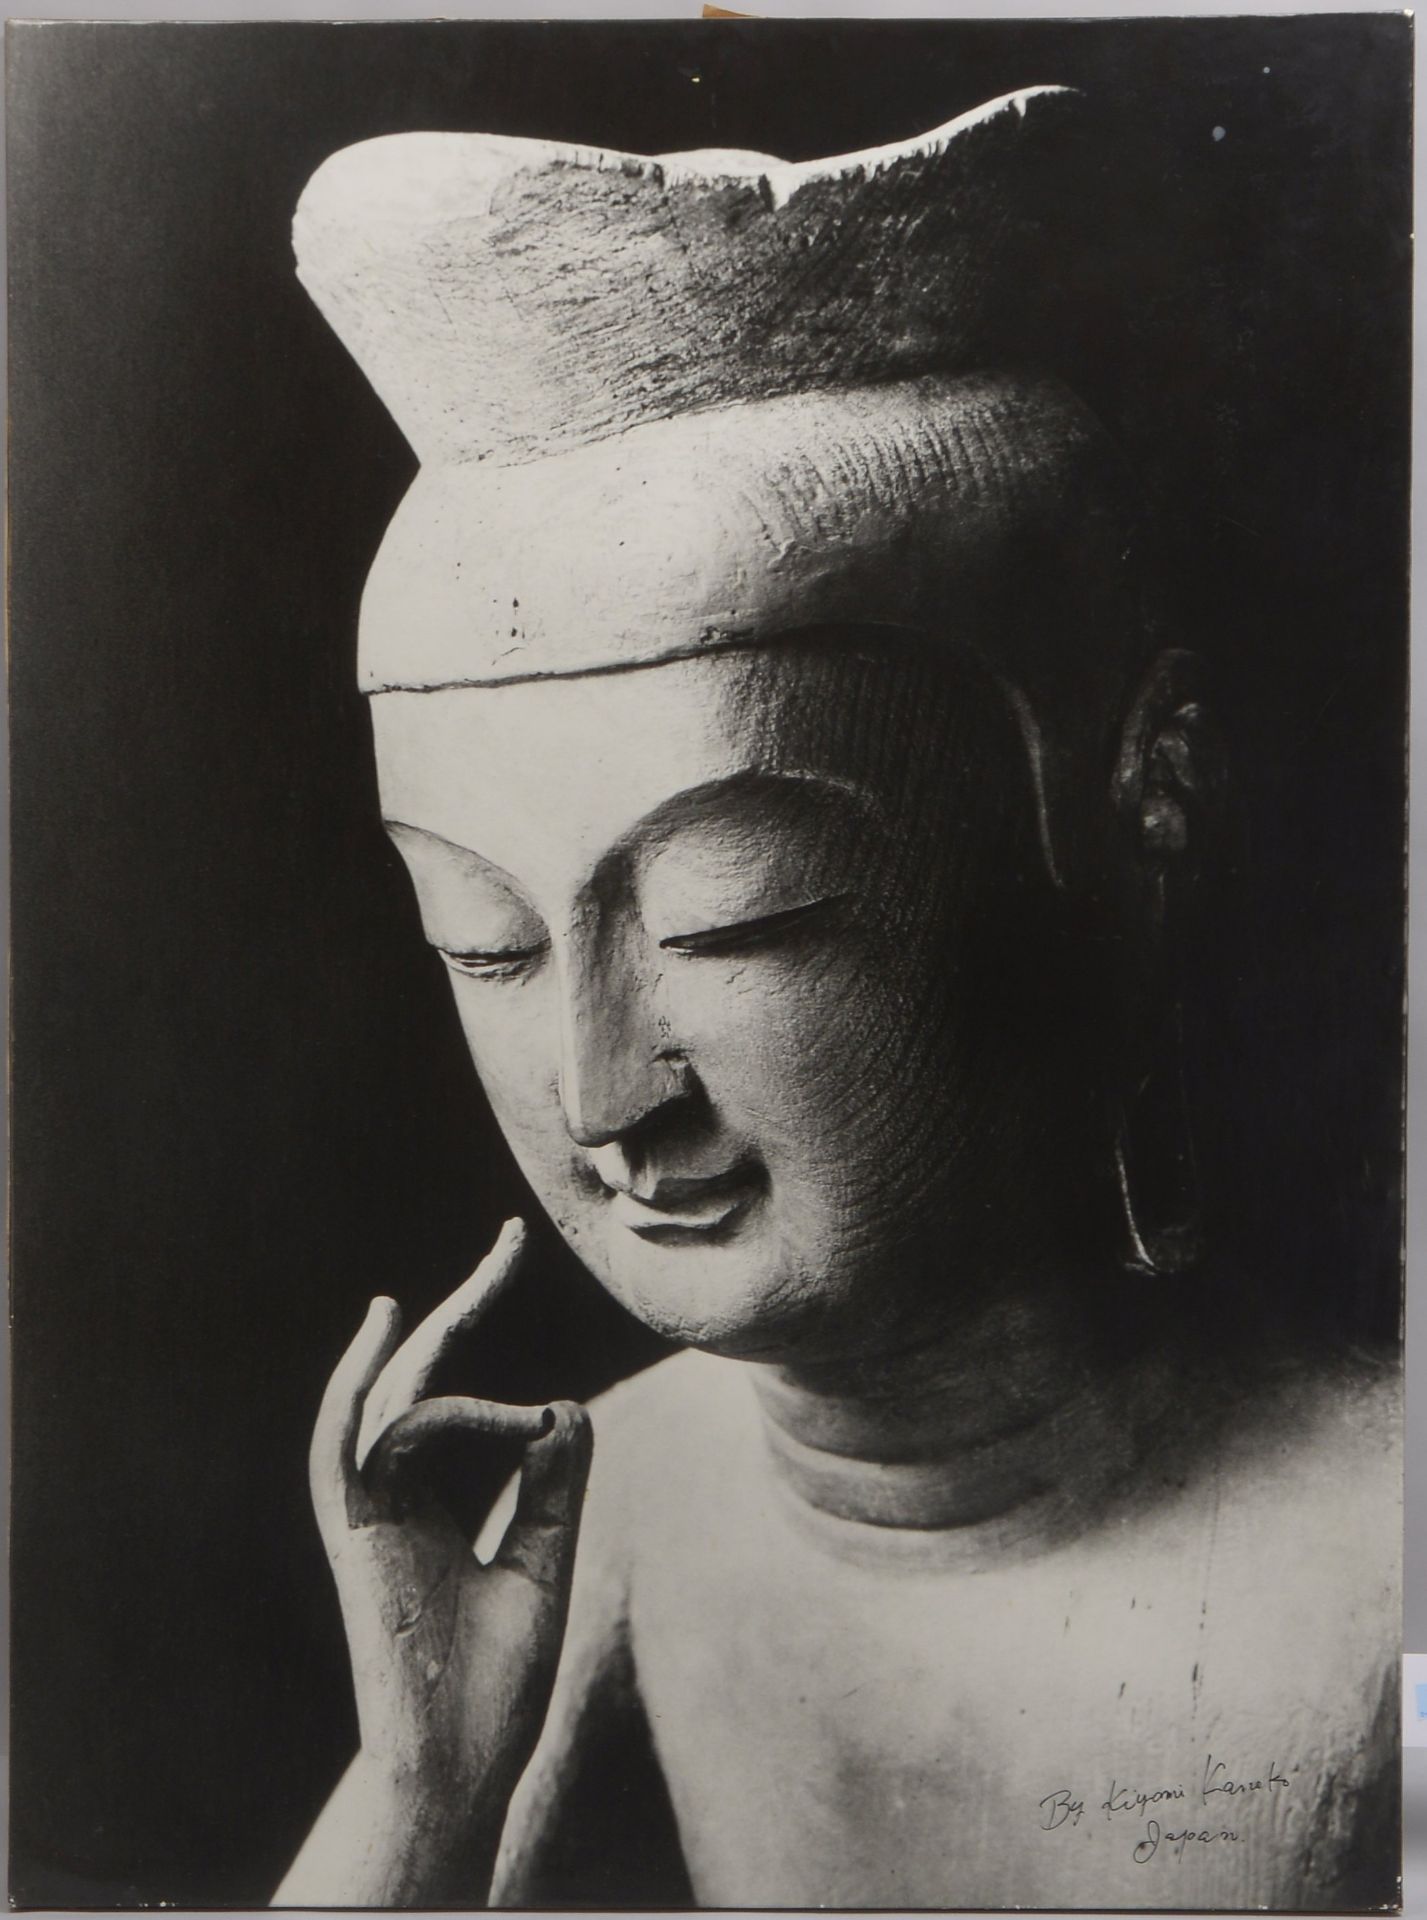 Kaneko, Kiyomi, &#039;Buddhaportrait&#039; (Darstellung in Mudrahaltung), gro&szlig;er Fotoabzug auf